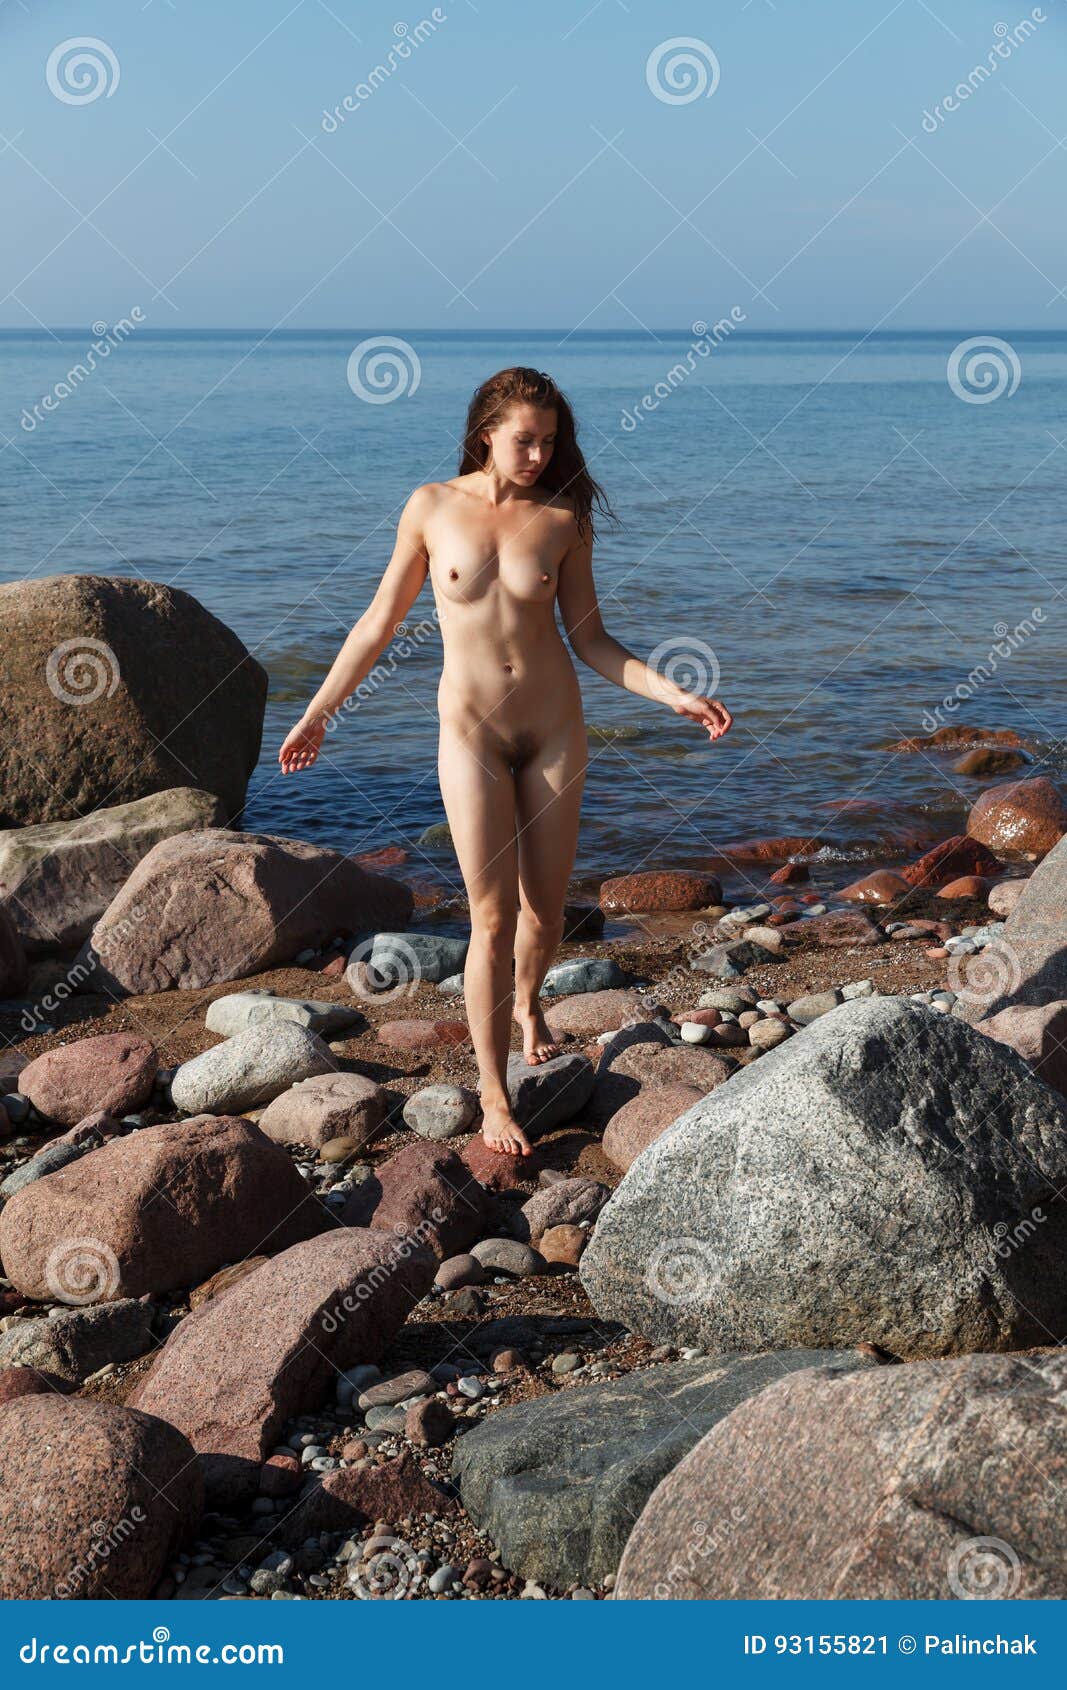 naked girl outdoors enjoying nature stock